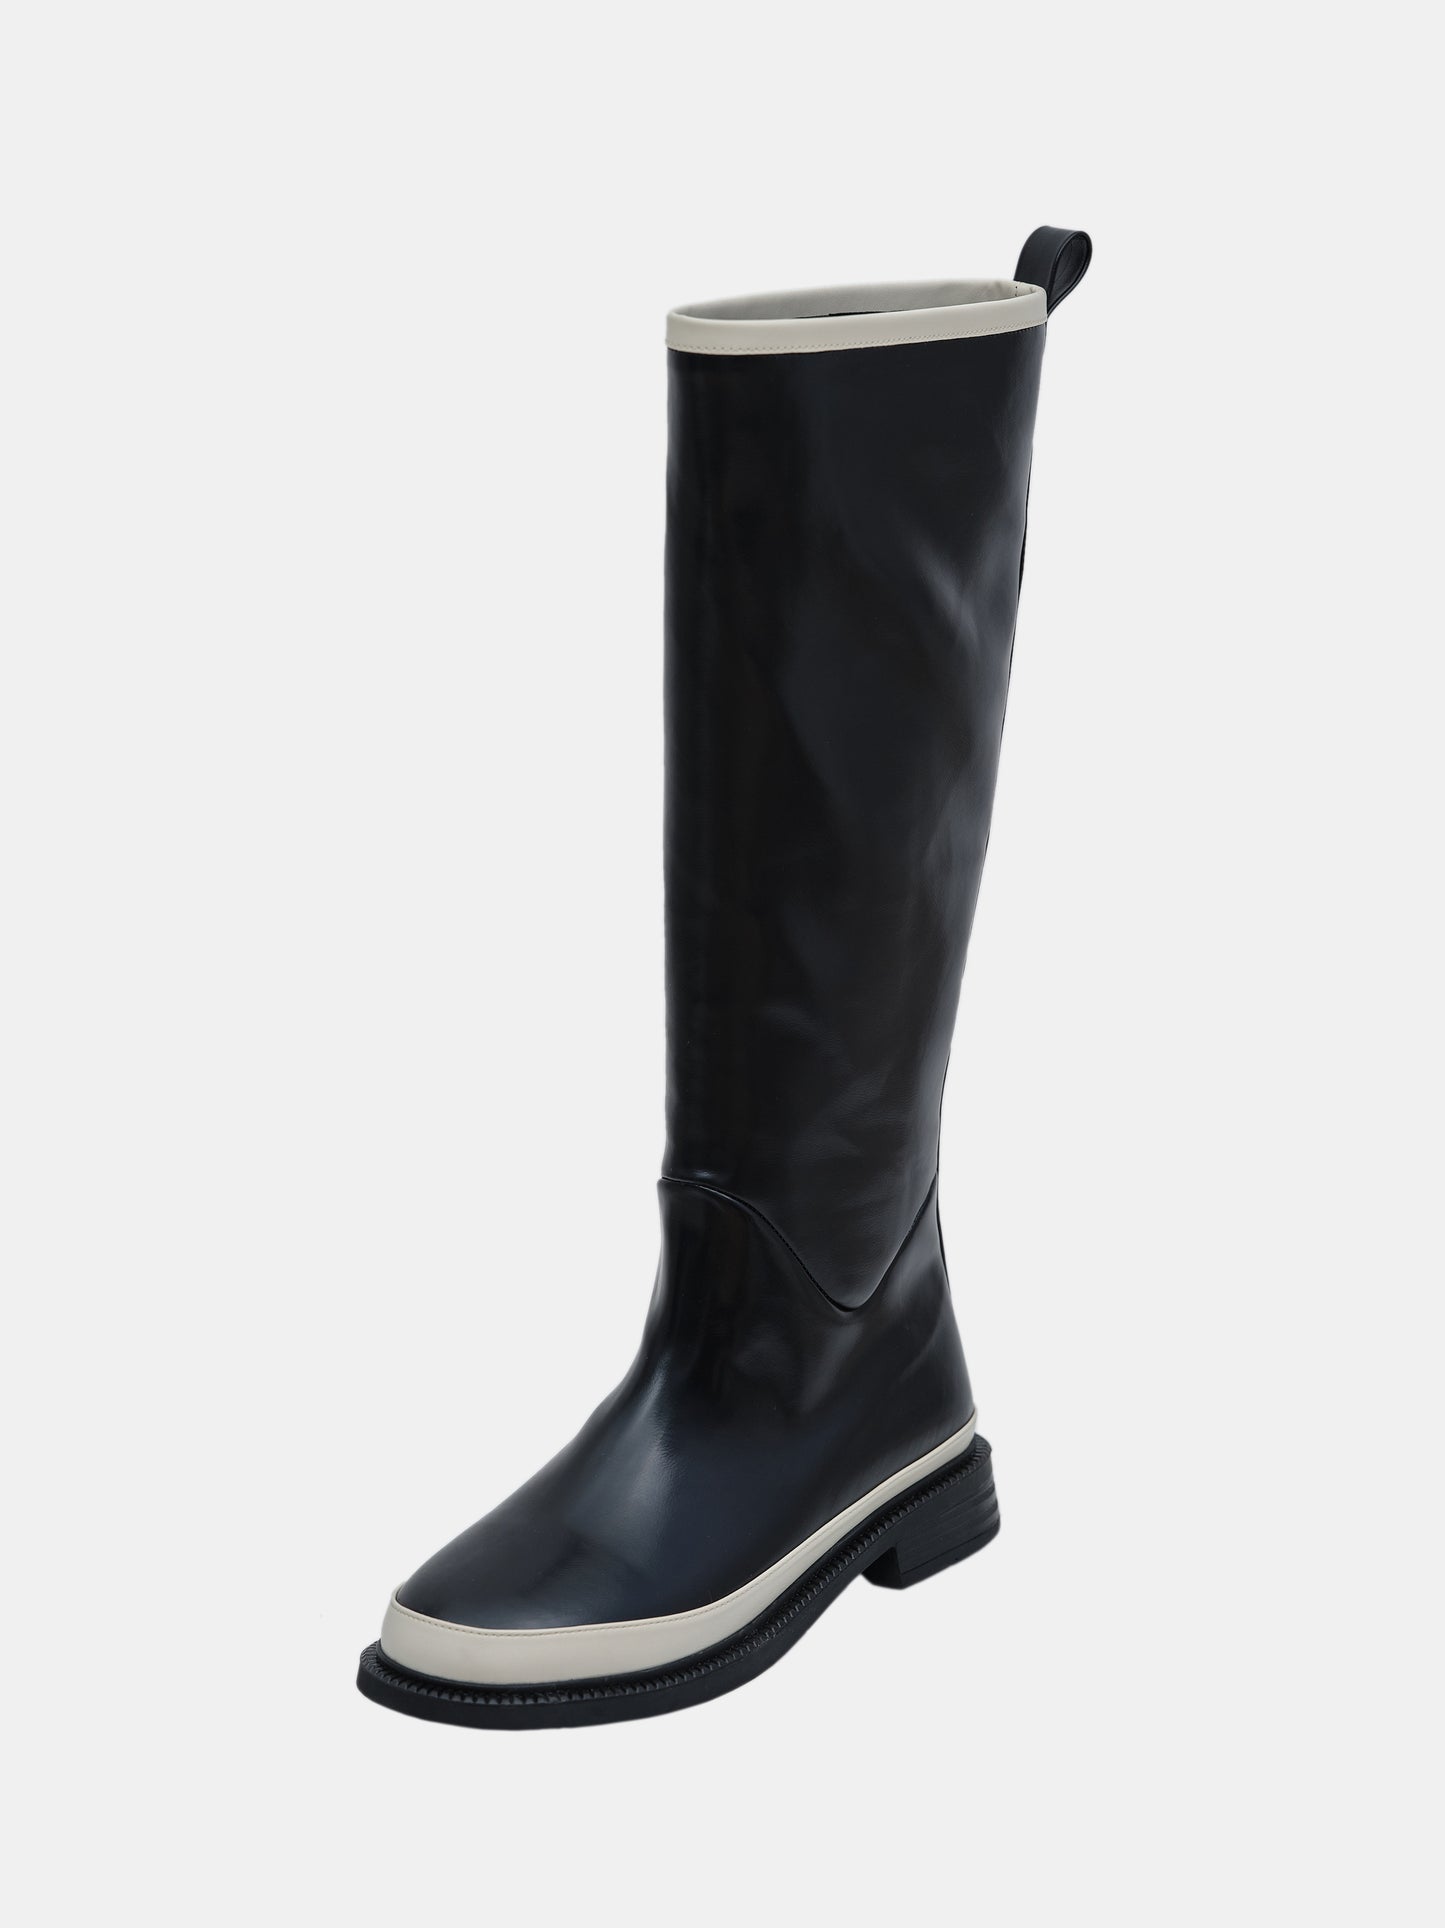 Contrast Wellington Boots, Black